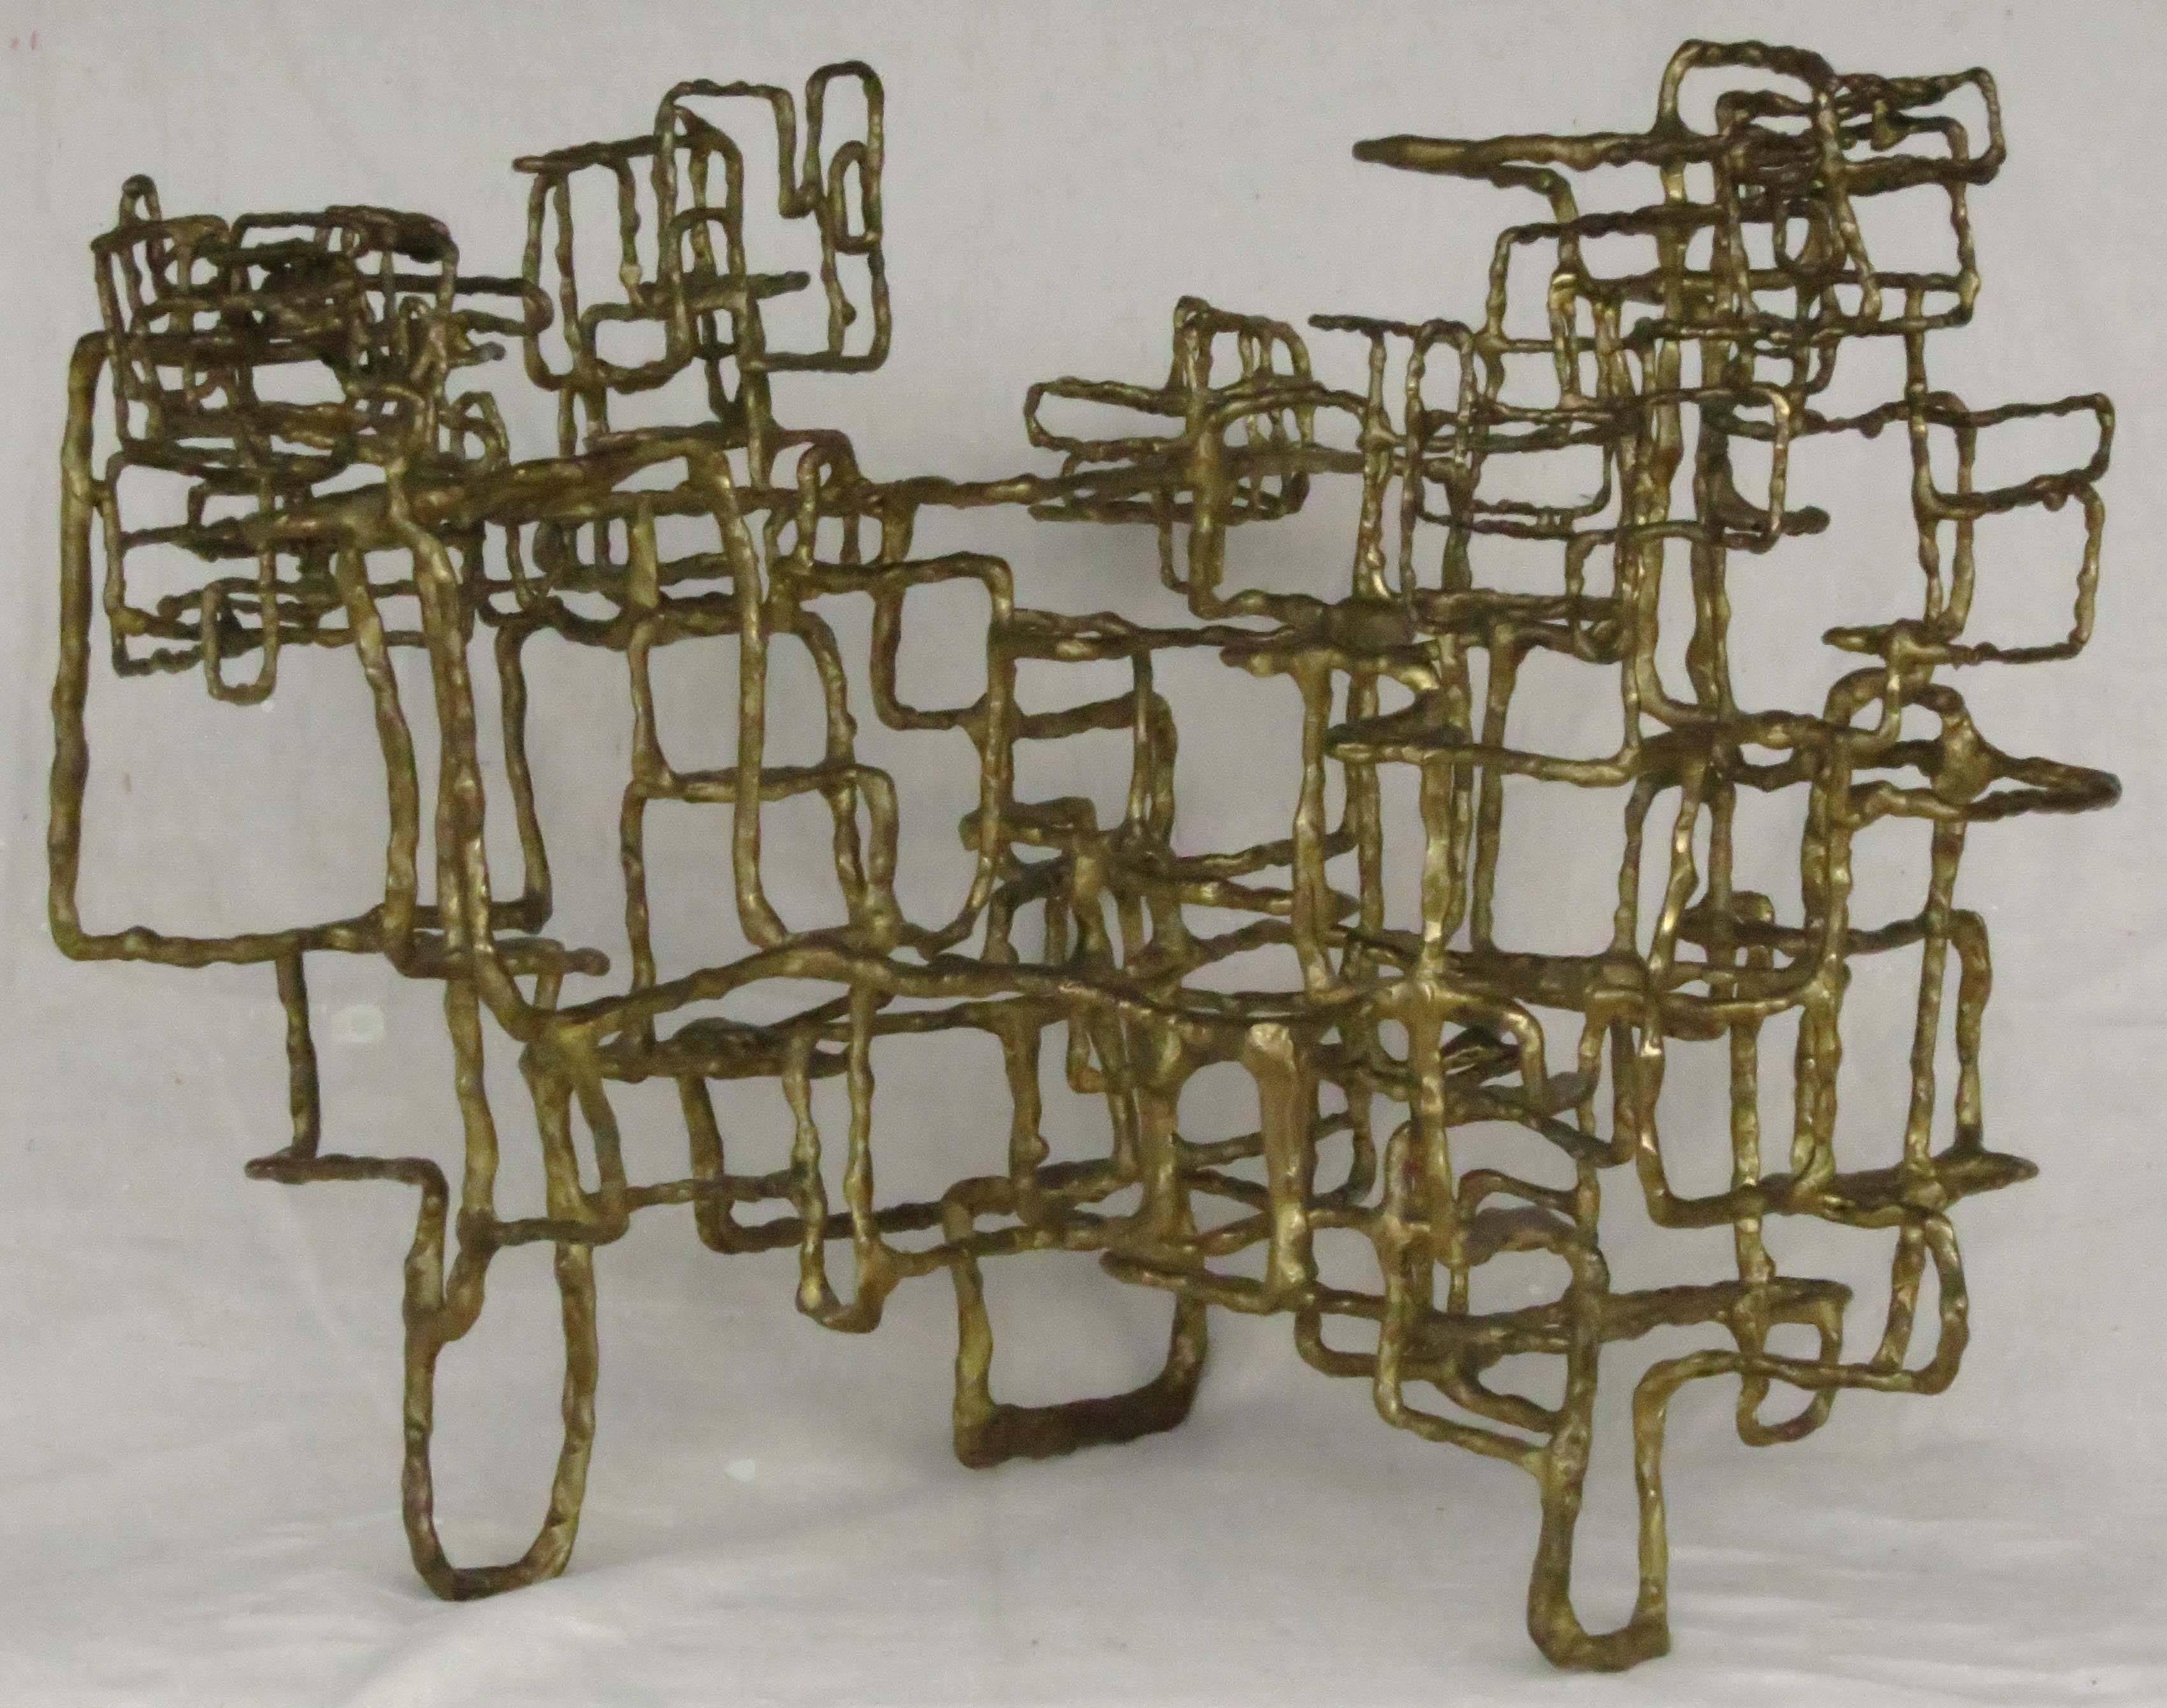 Ibram Lassaw Abstract Sculpture – "Loom III"